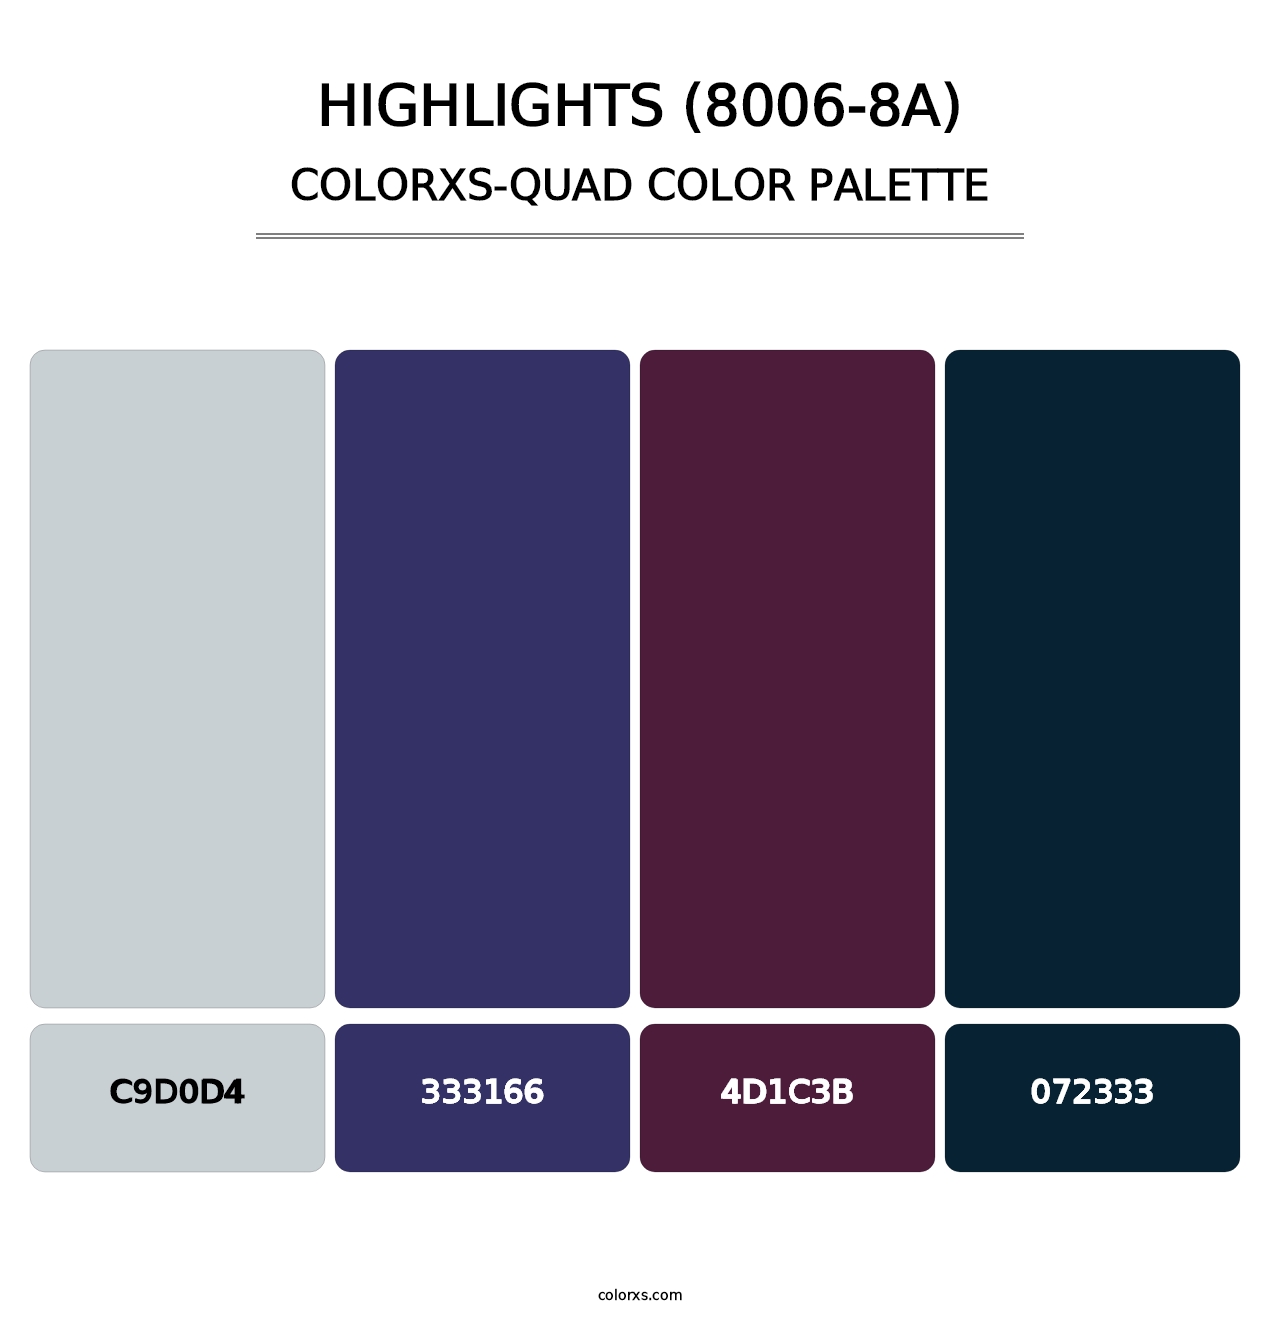 Highlights (8006-8A) - Colorxs Quad Palette